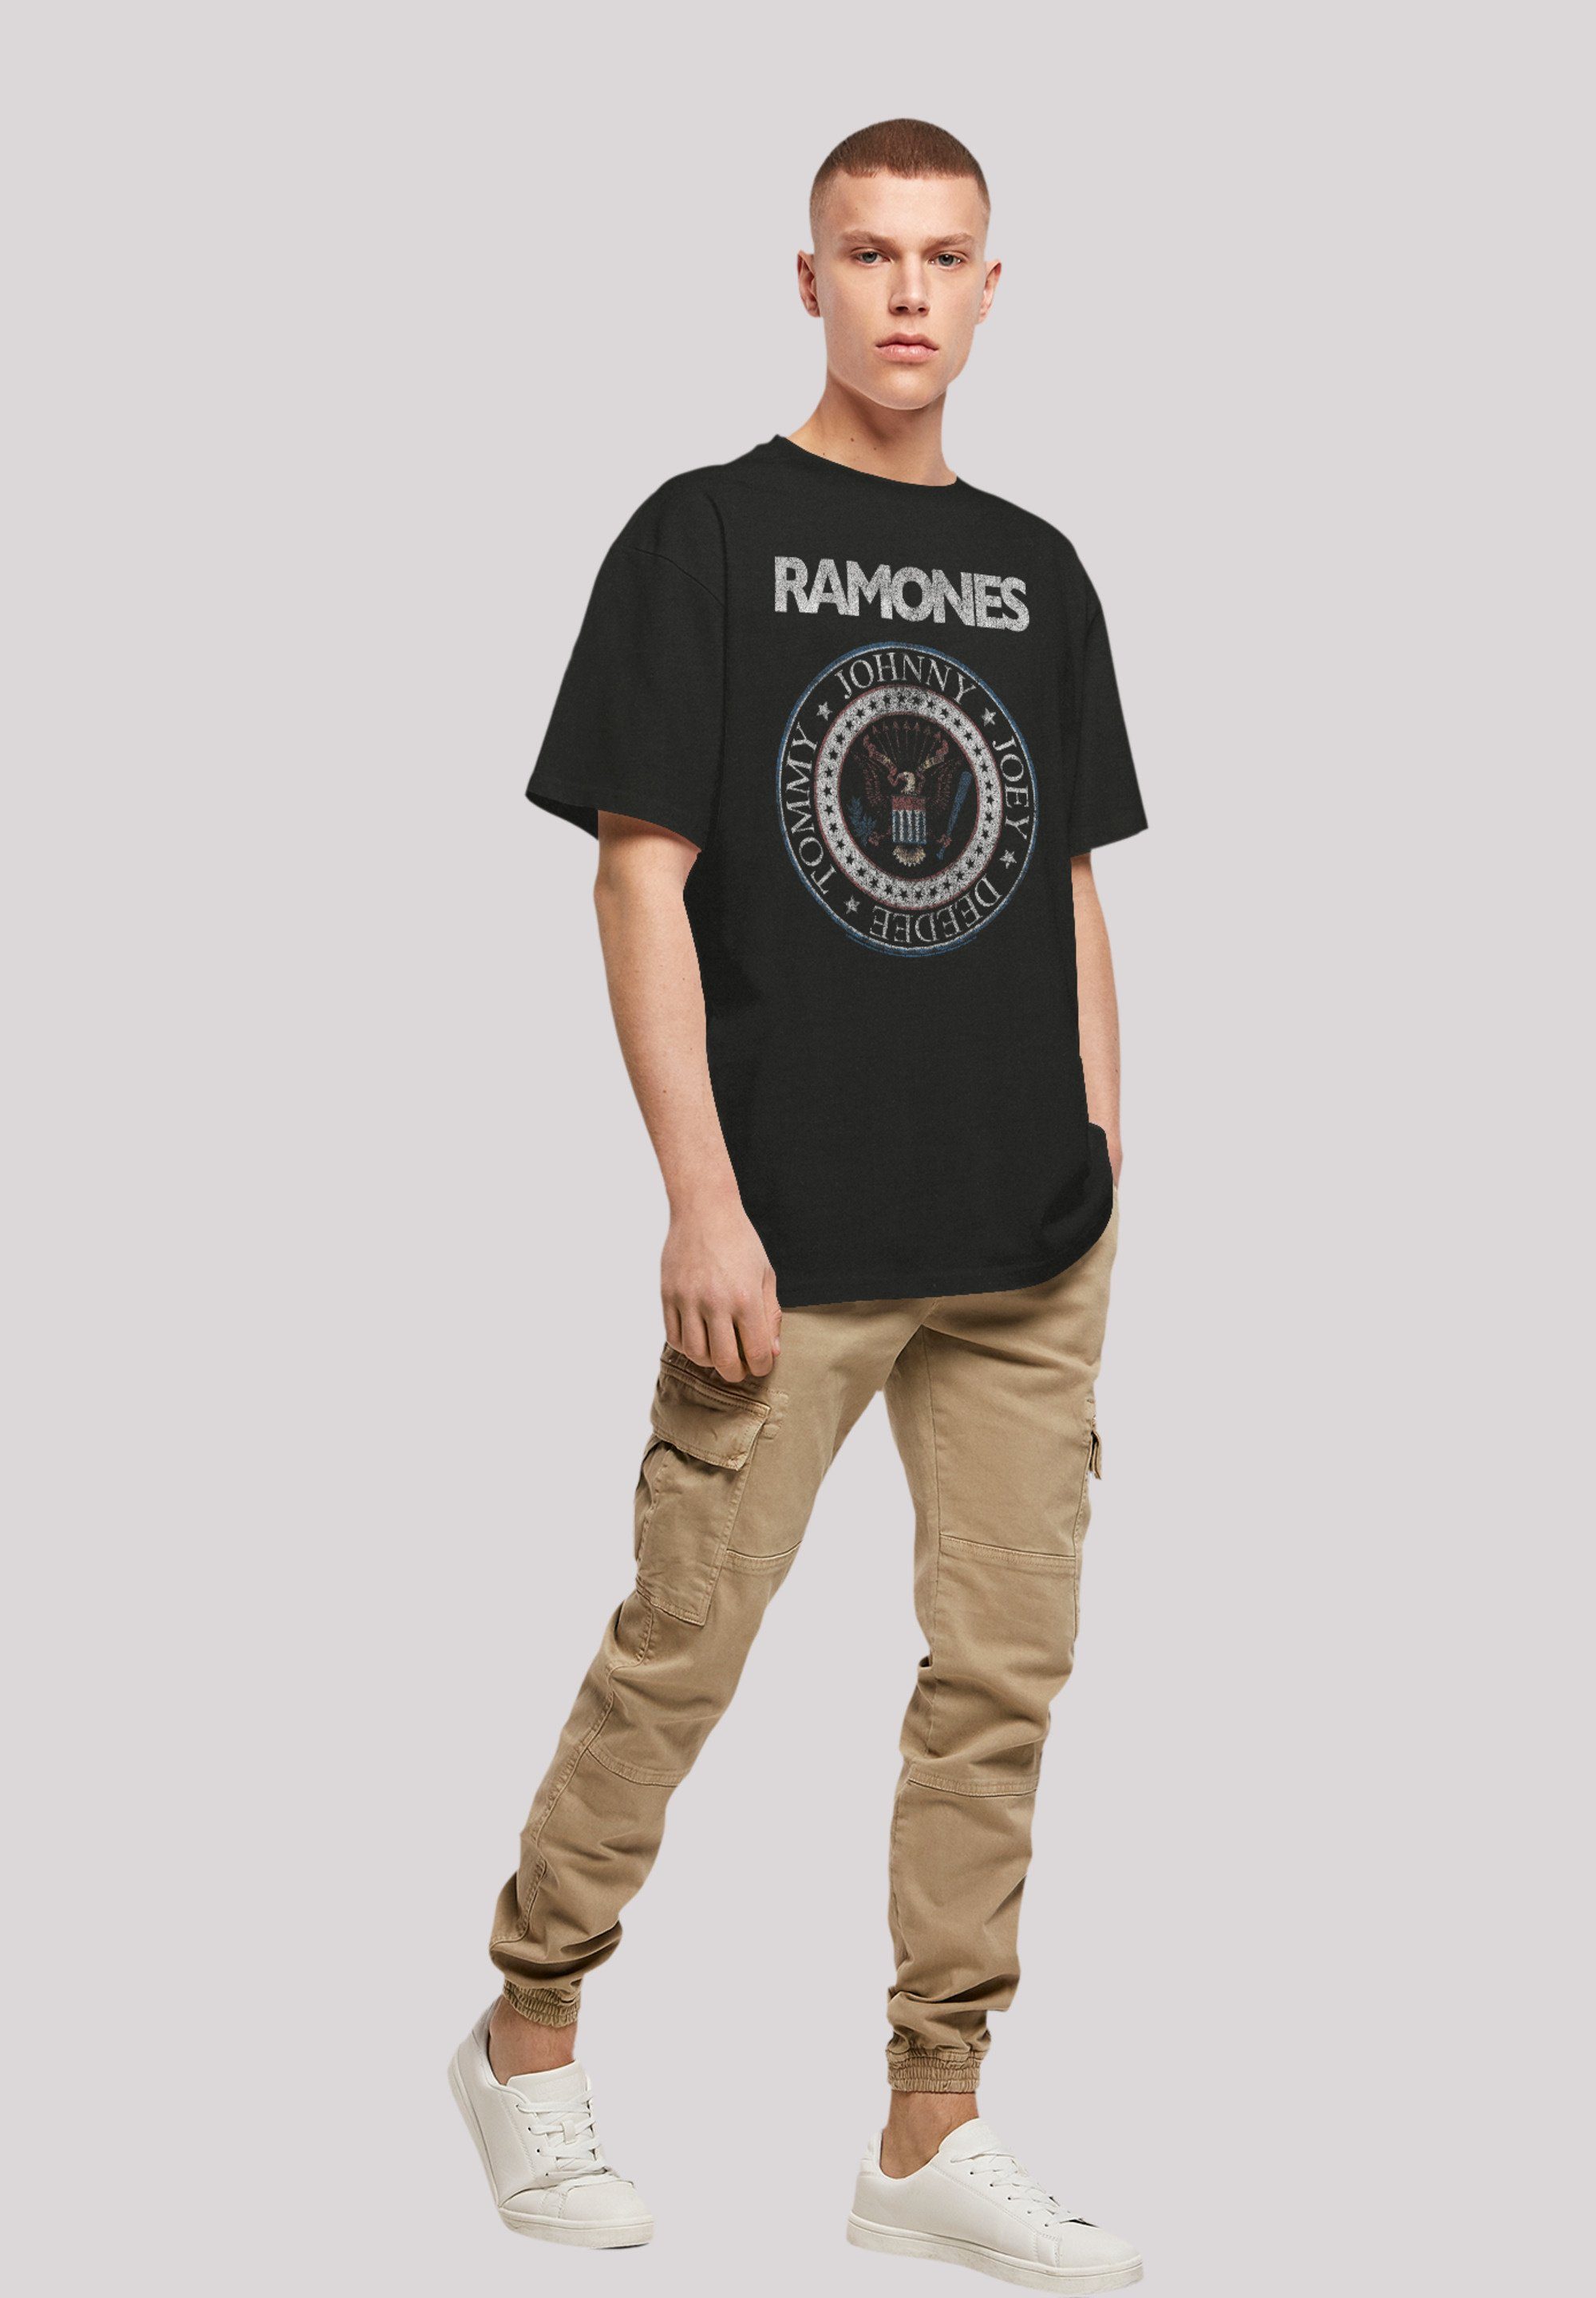 Qualität, Rock-Musik And Rock Musik Premium F4NT4STIC T-Shirt Band, Ramones Seal White Band schwarz Red